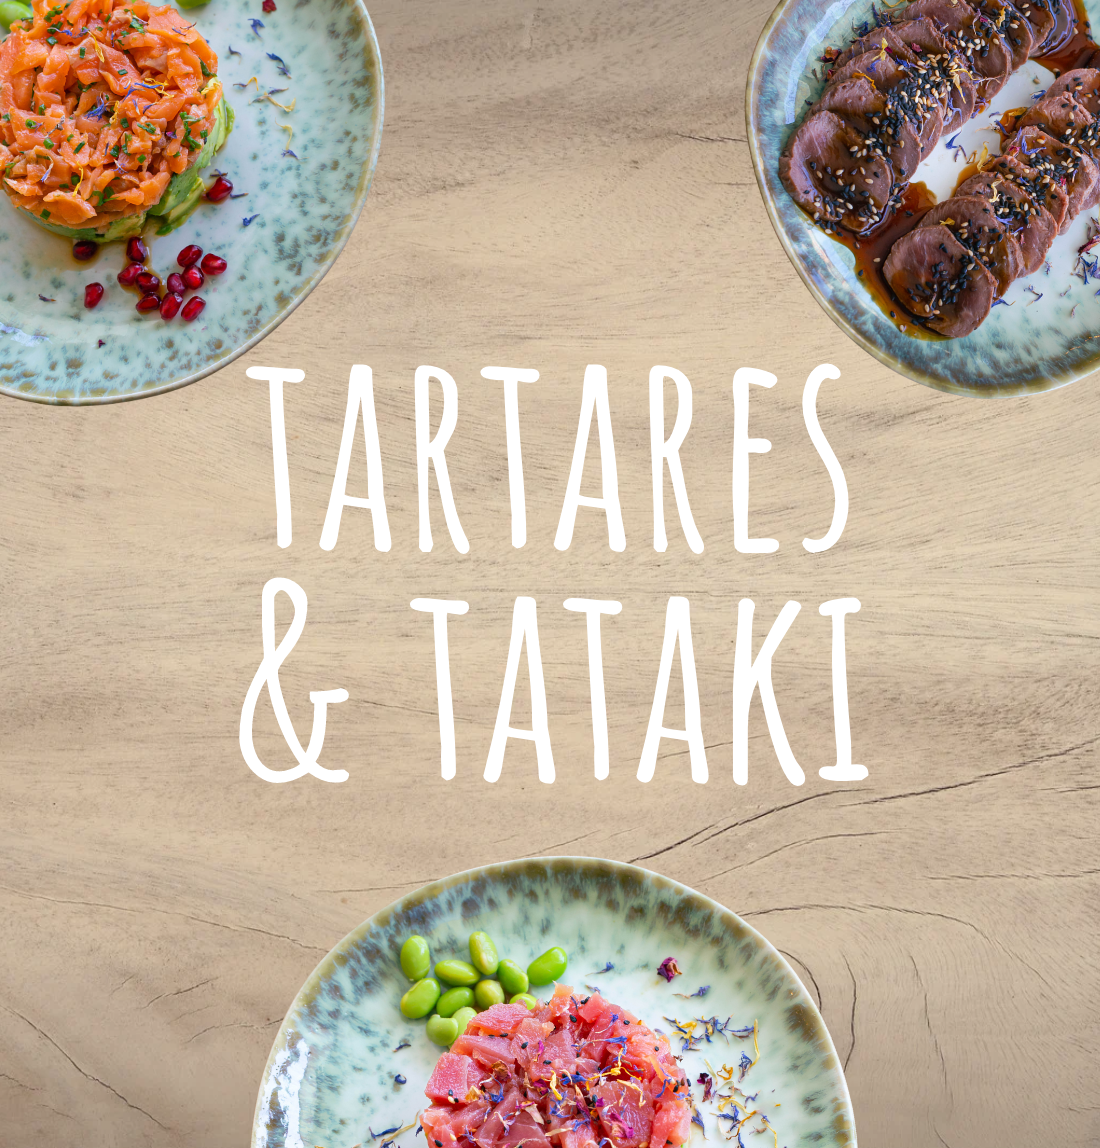 TARTARES AND TATAKI